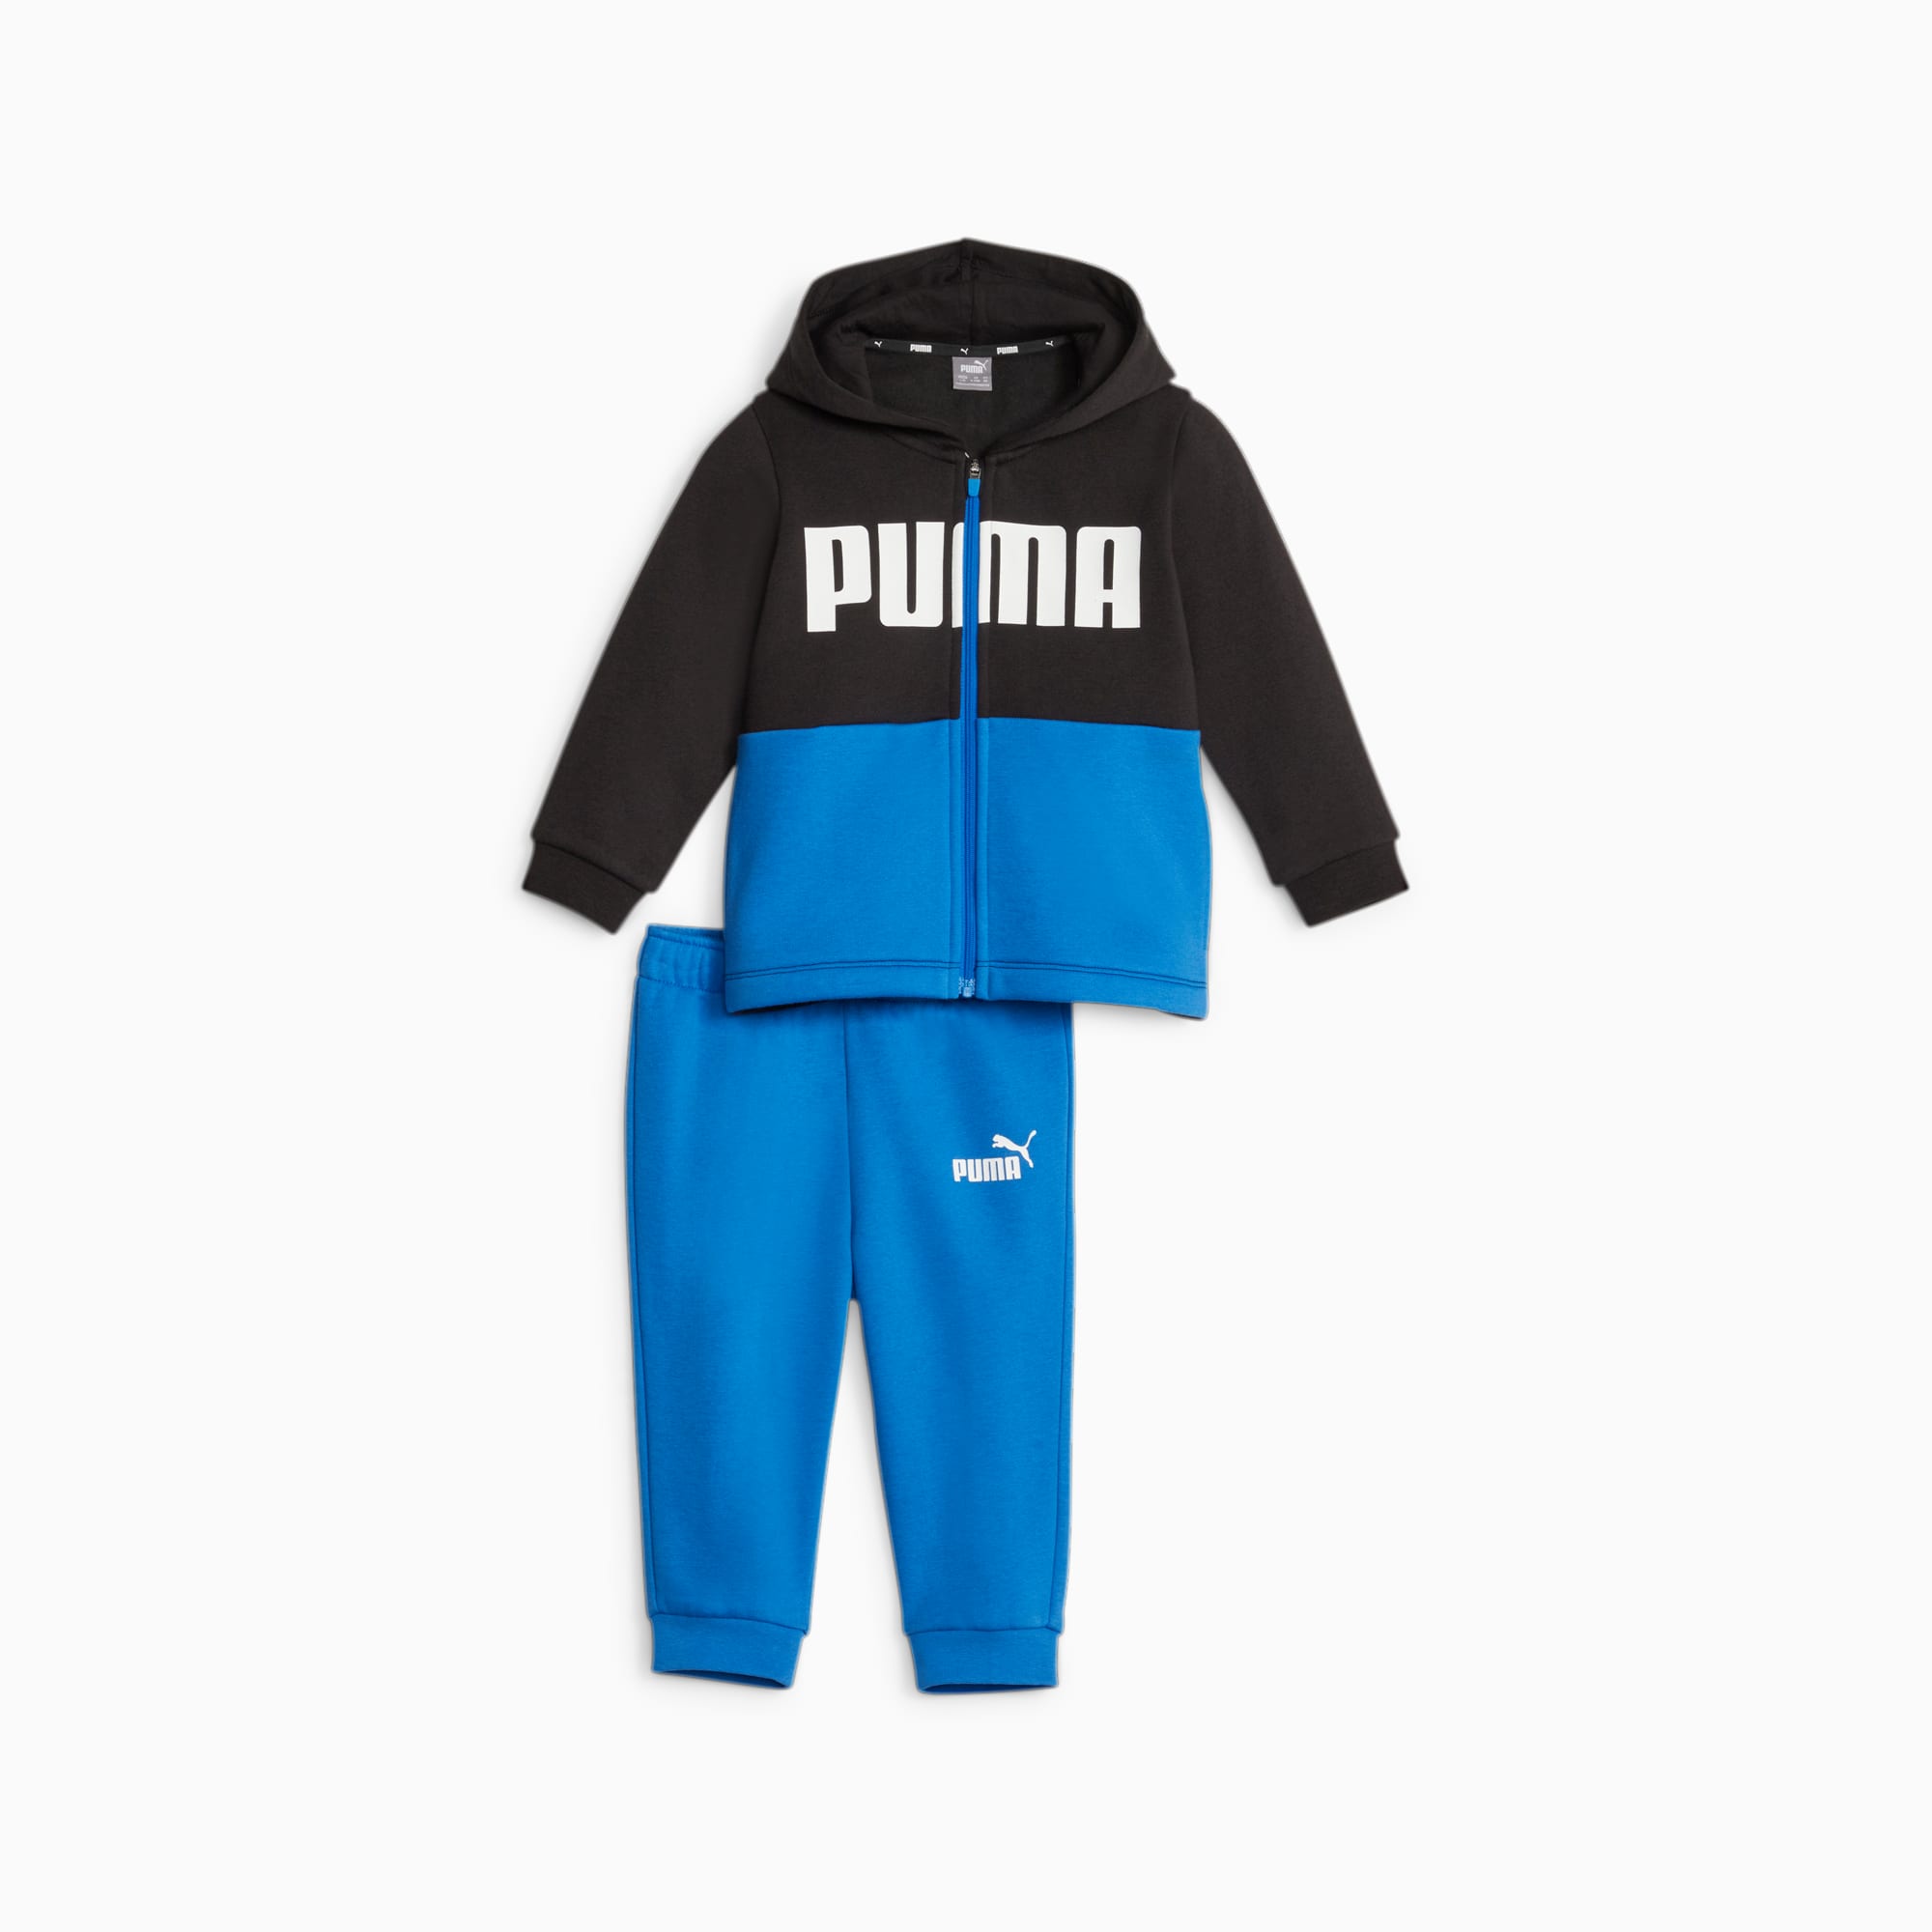 PUMA Minicats Colourblock Jogginganzug Baby Für Kinder, Blau, Größe: 92, Kleidung